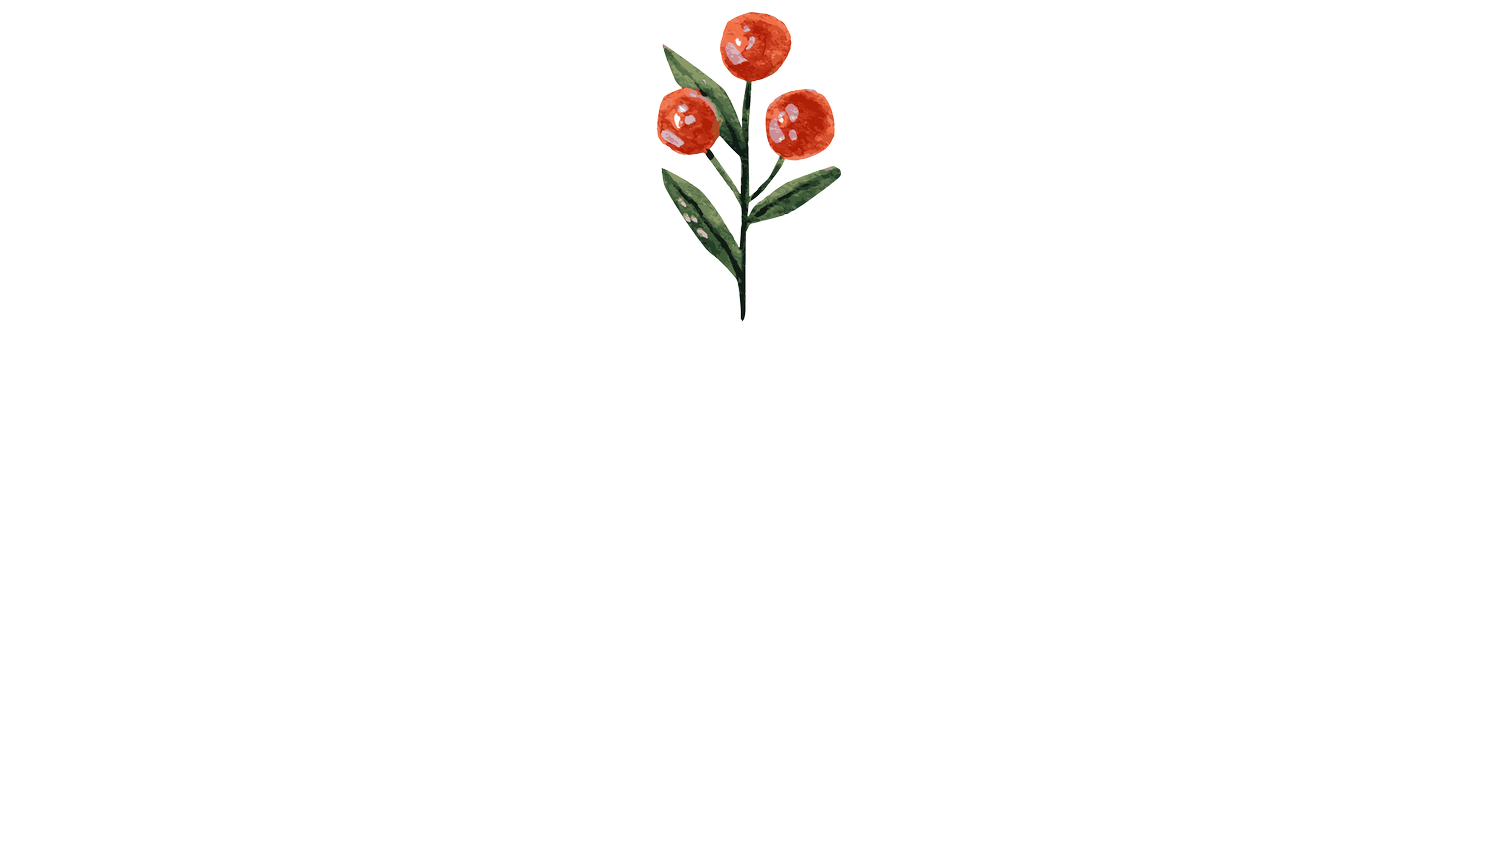 merry shitmas